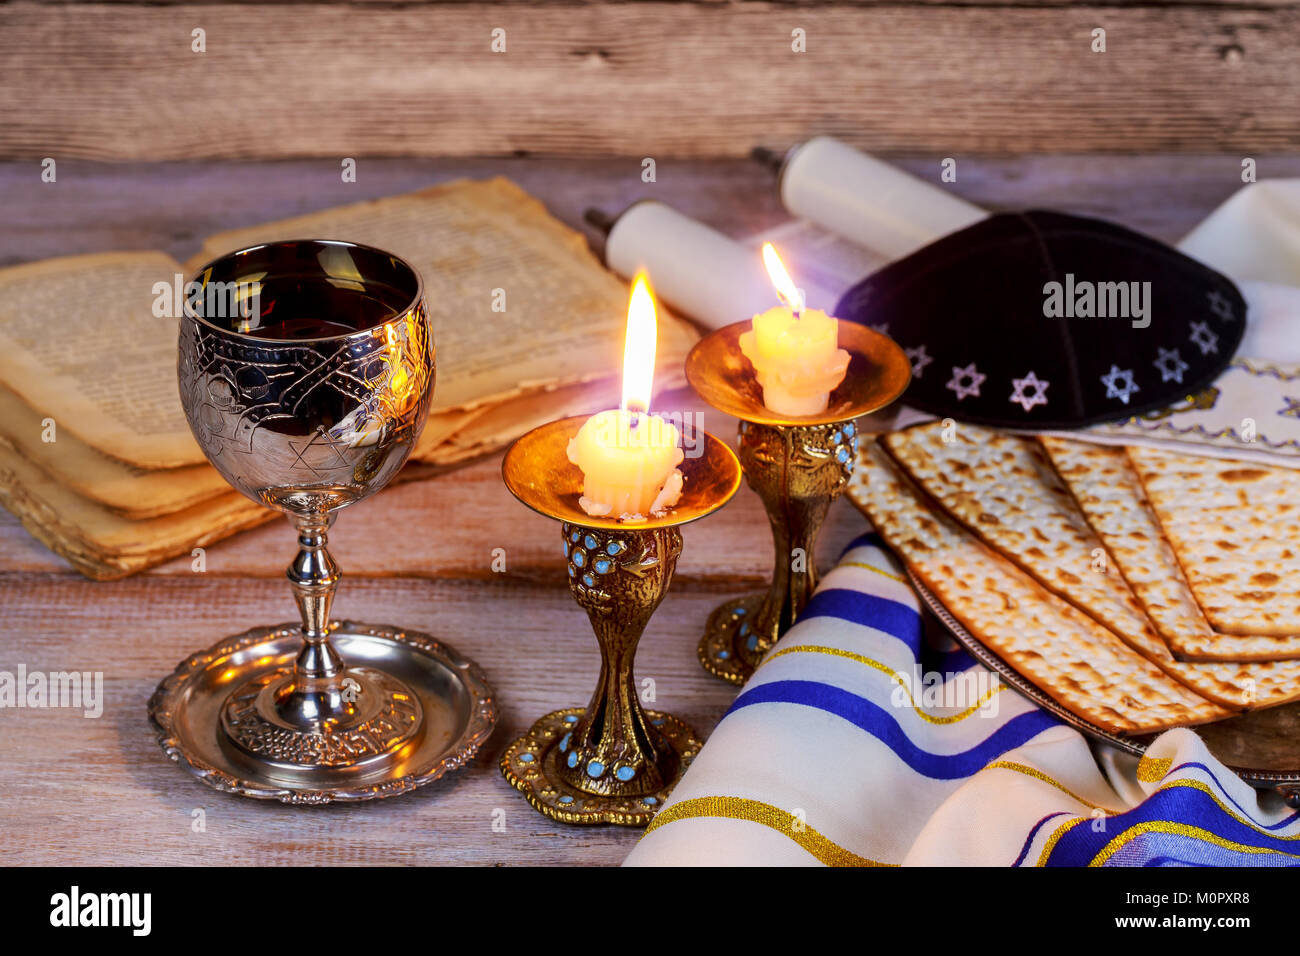 https://c8.alamy.com/comp/M0PXR8/shabbat-shalom-traditional-jewish-sabbath-ritual-challah-bread-M0PXR8.jpg